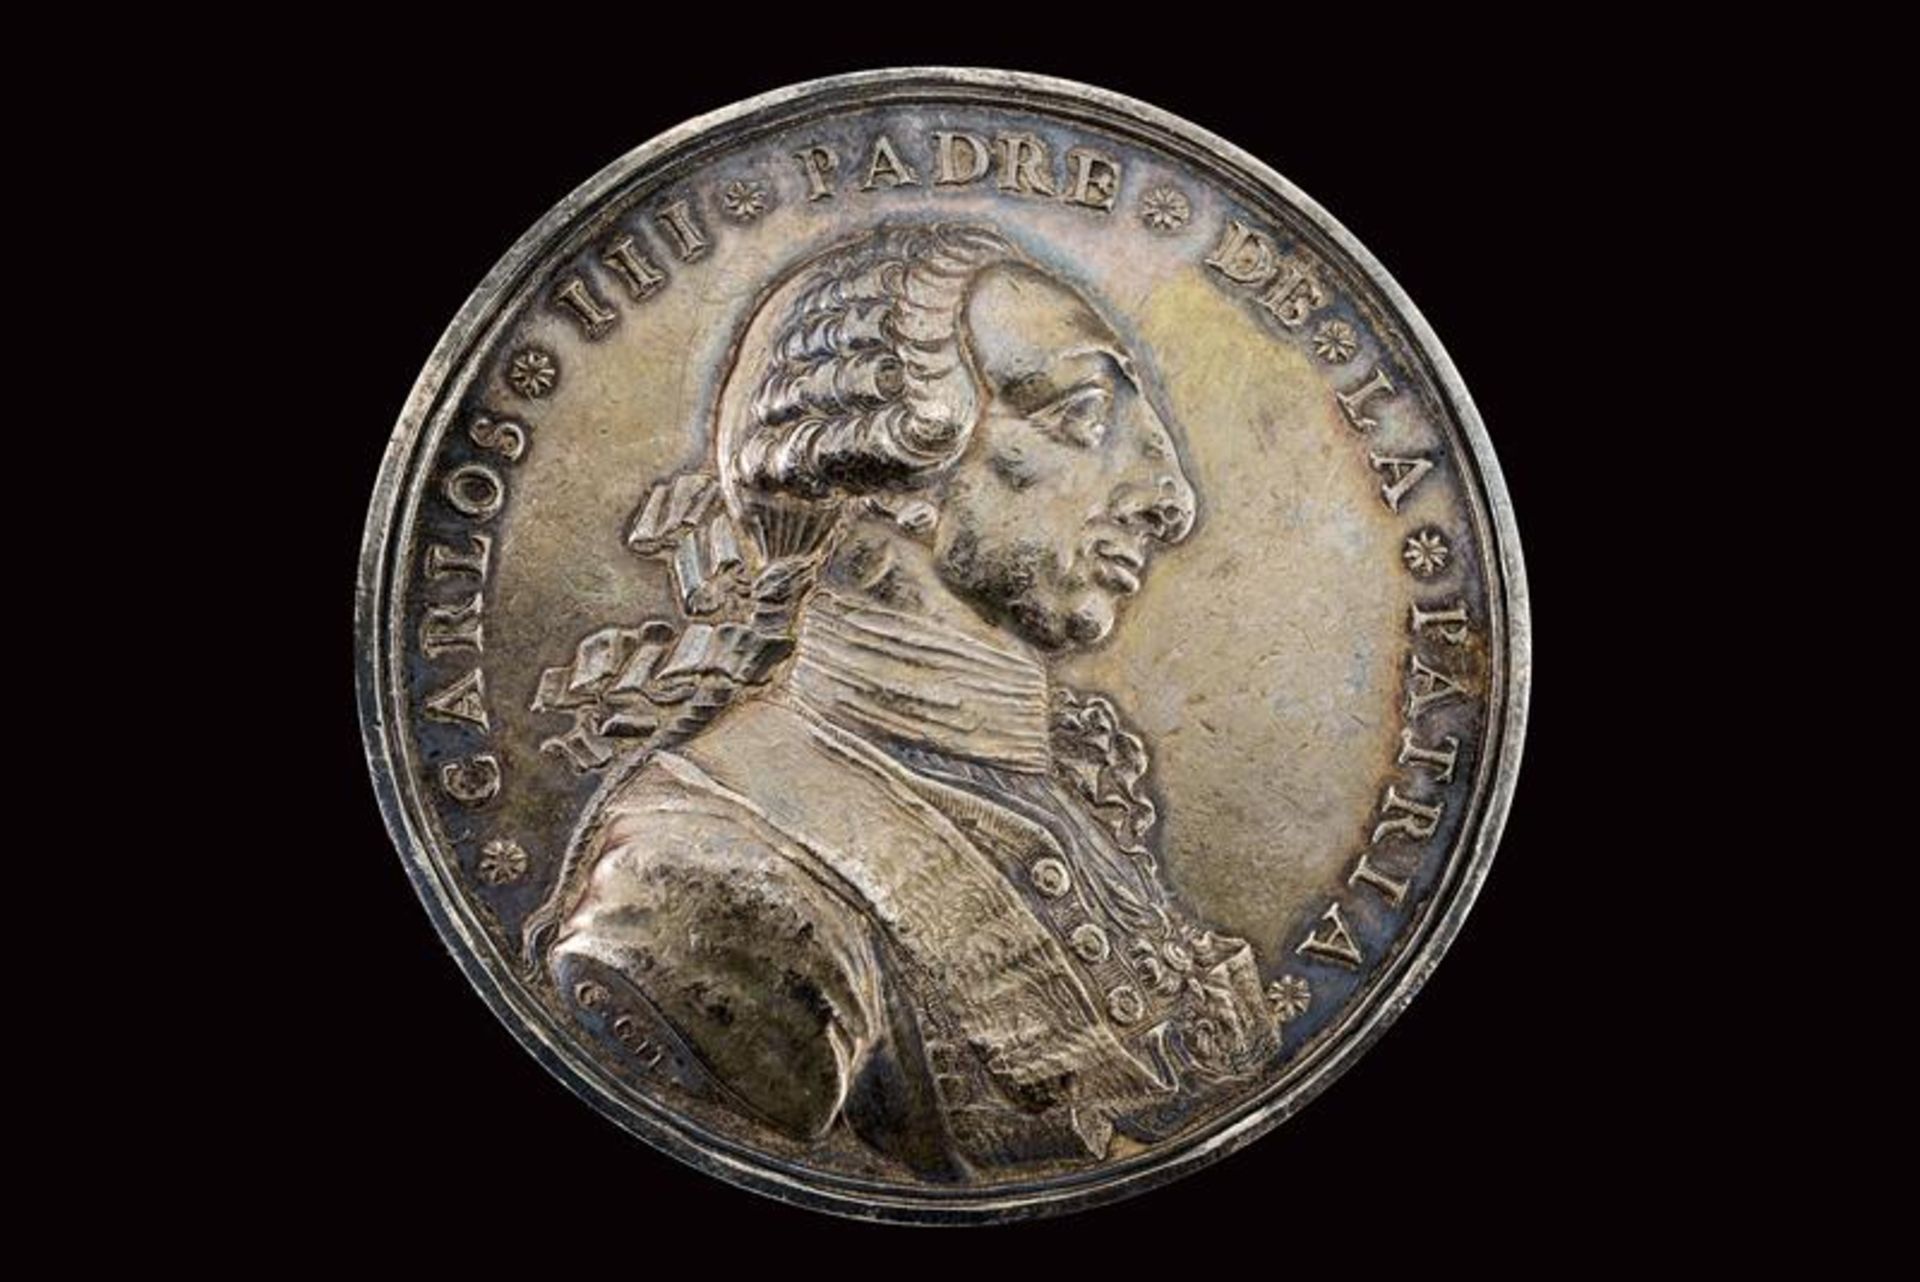 A silver Carlos III medal